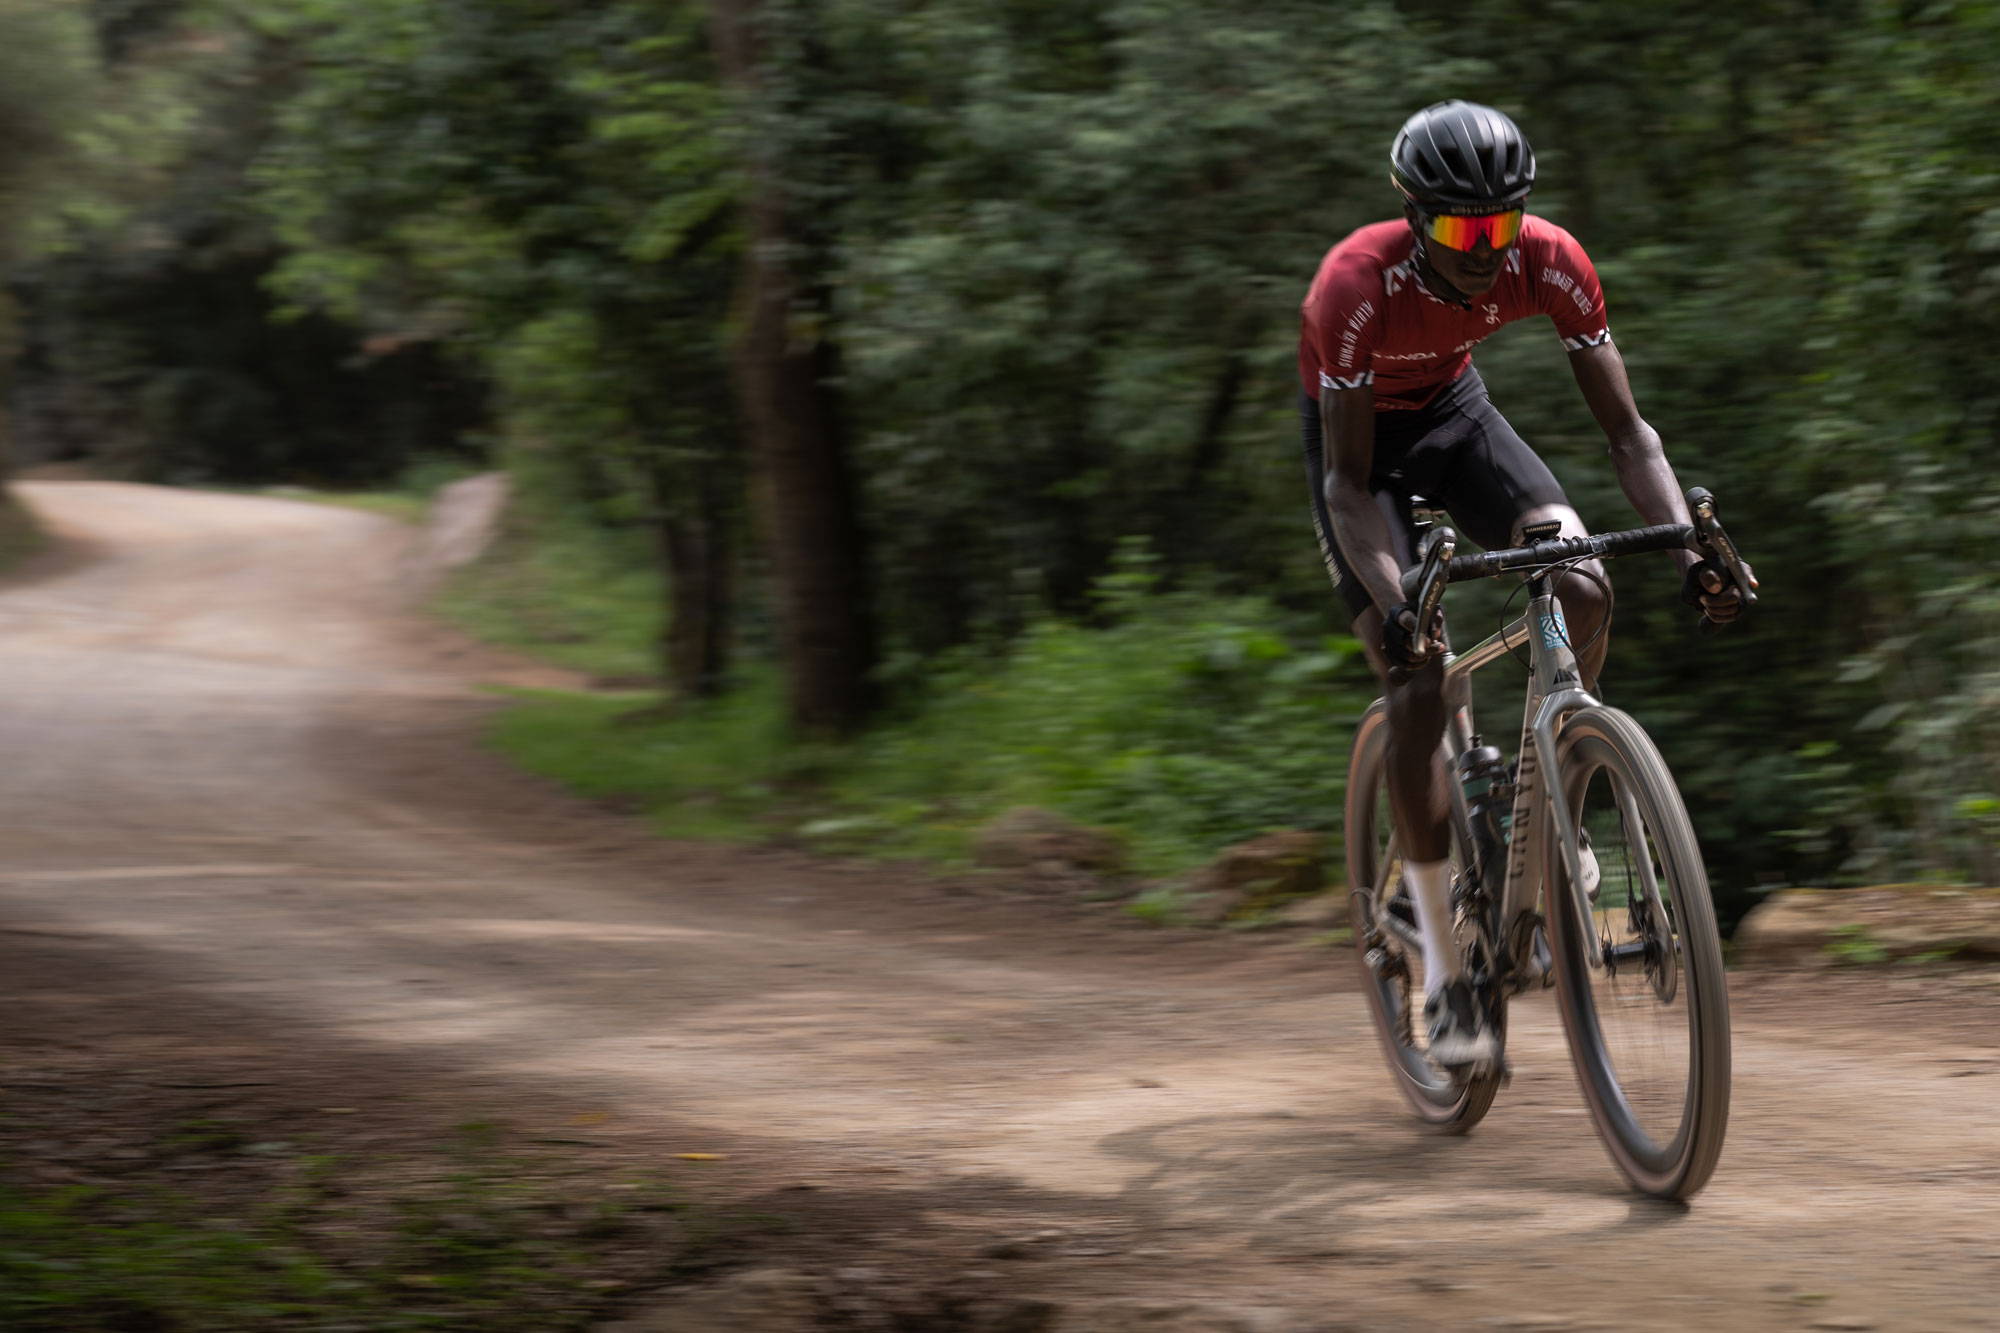 Rwanda Beyond rider Innocent